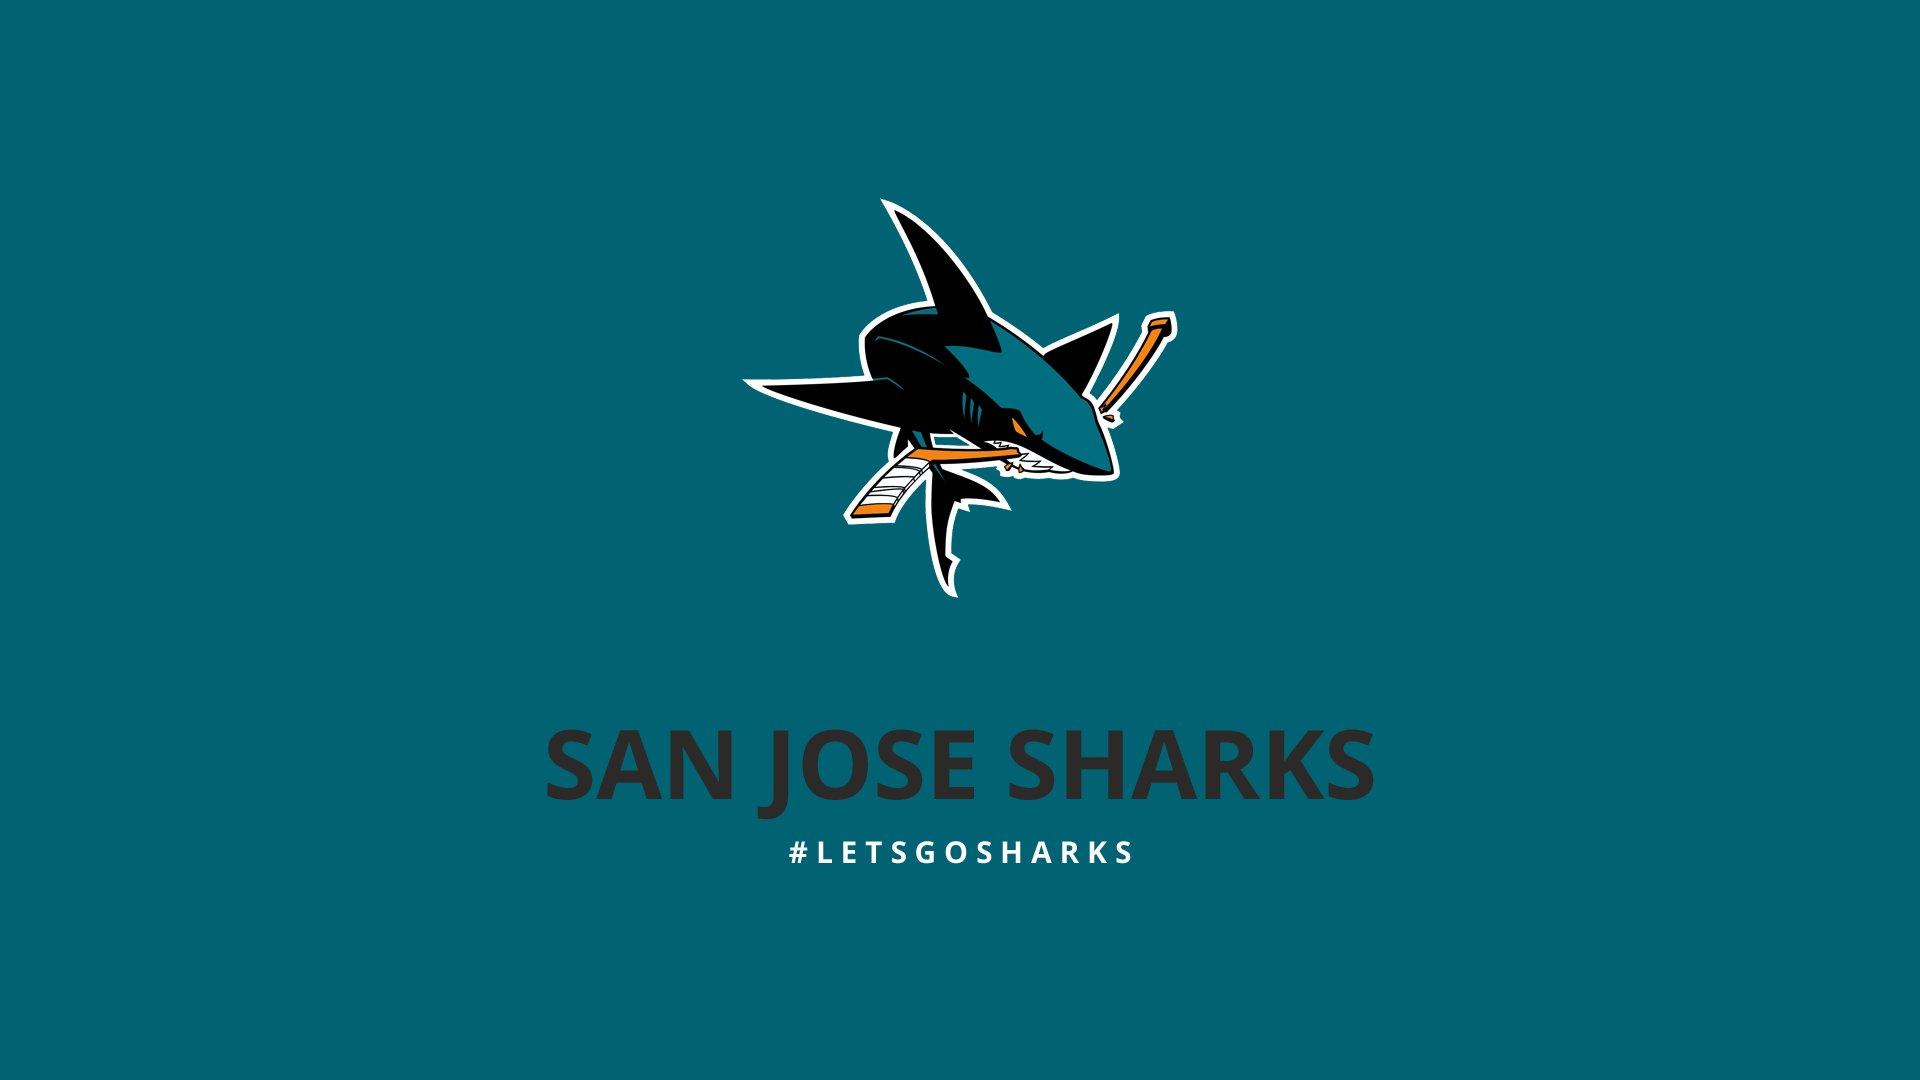 SAN JOSE SHARKS hockey nhl (2) wallpaperx1080